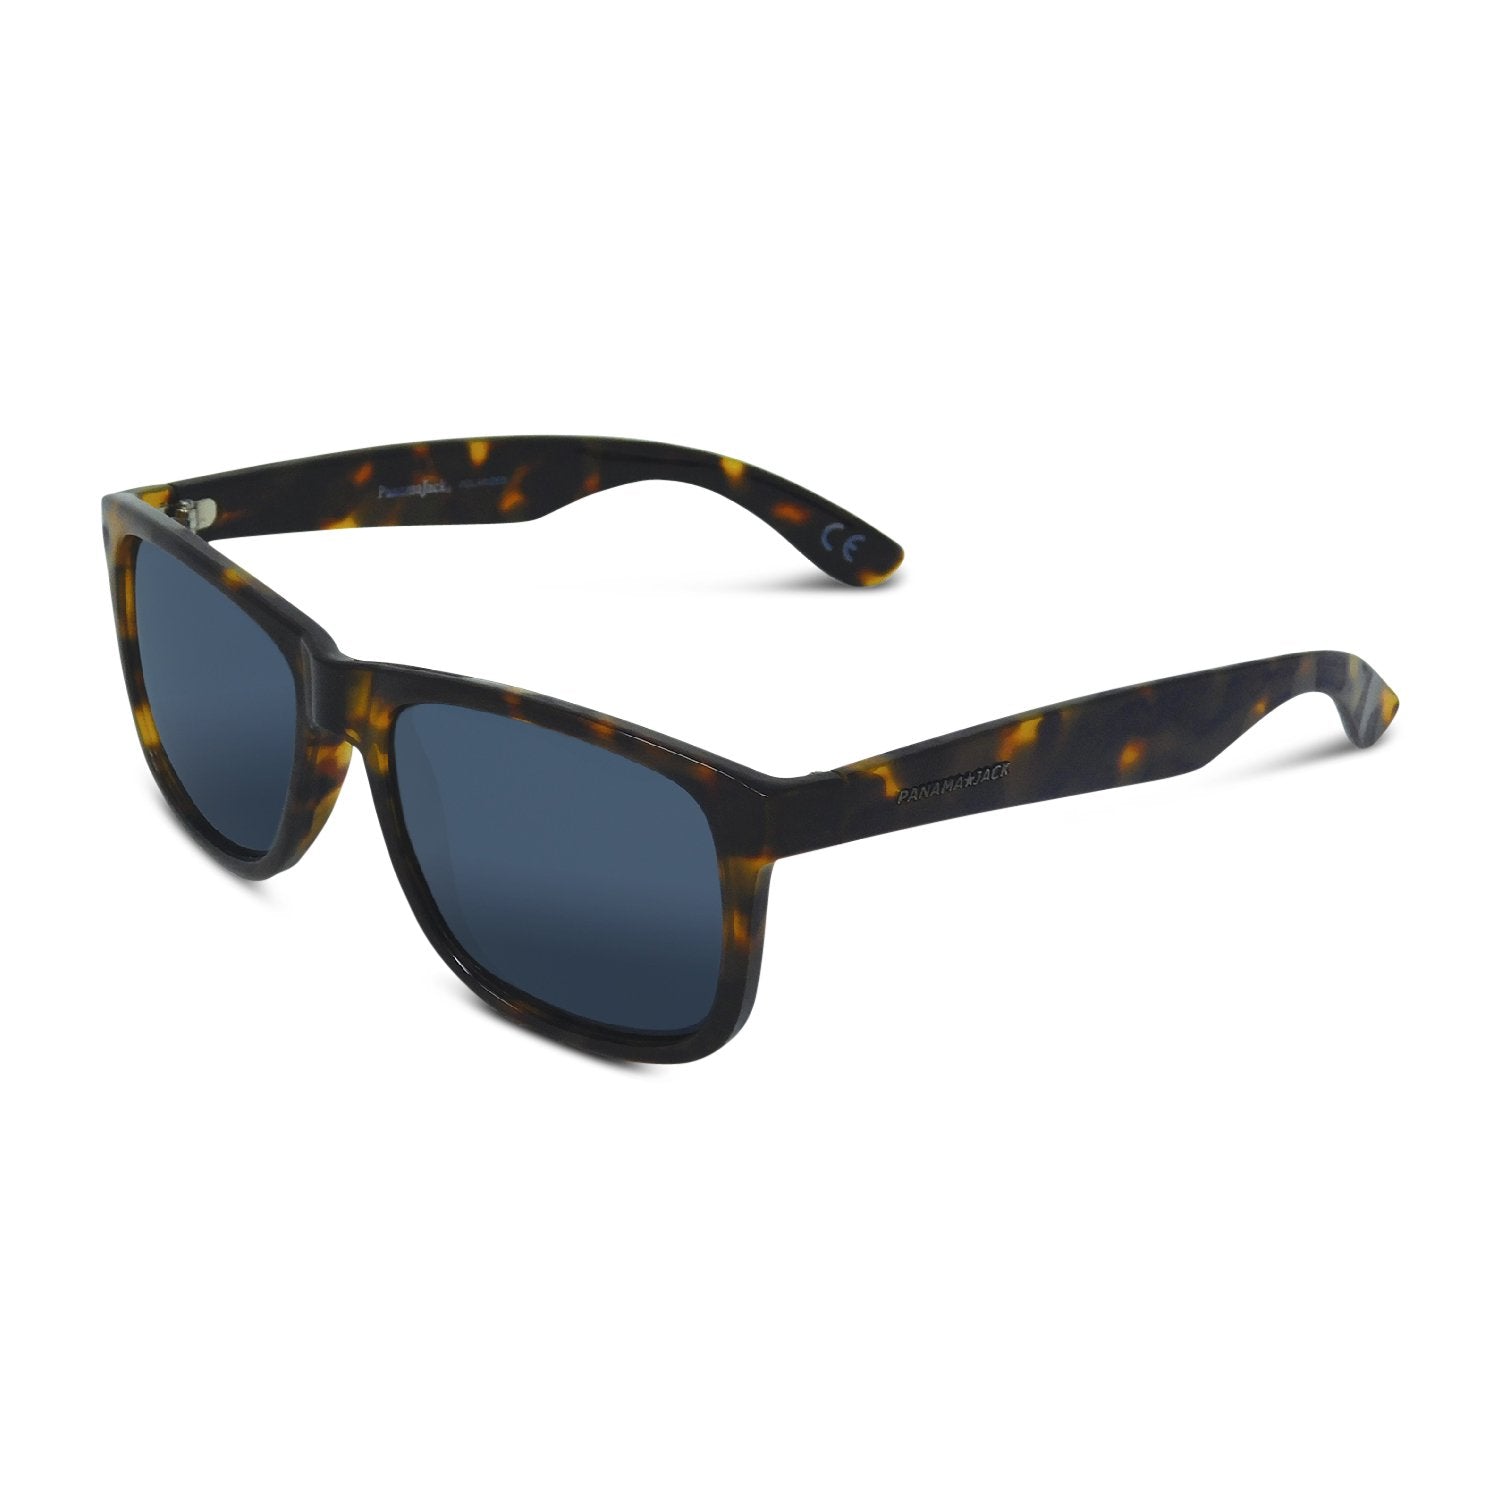 Kids Classic Way Sport Sunglasses – Panama Jack®